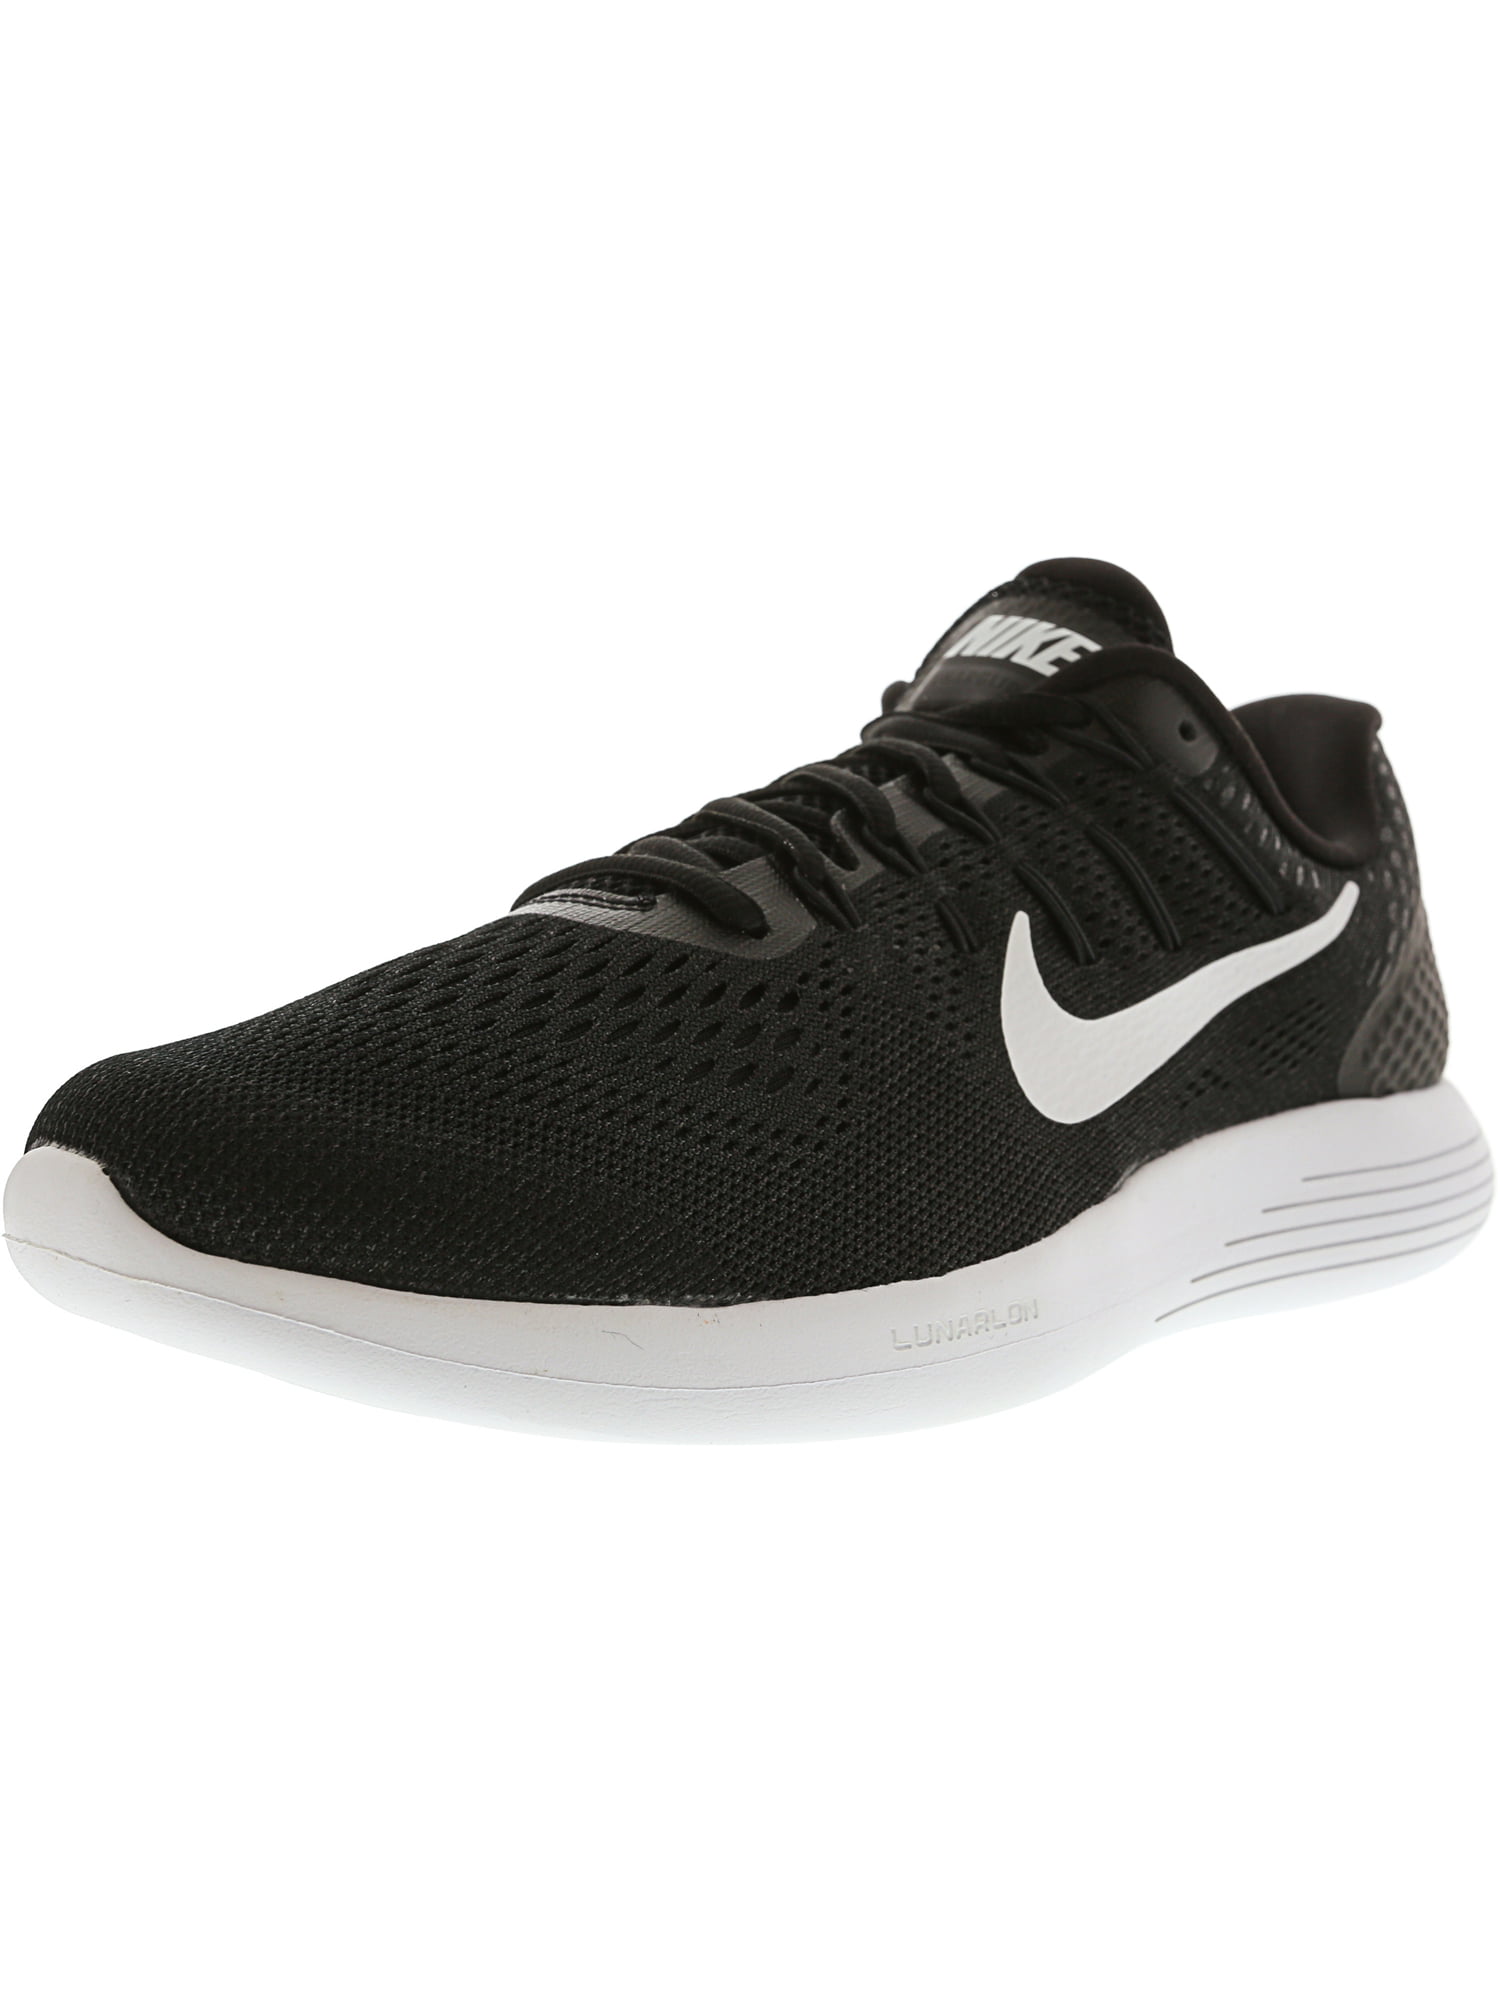 Nike Men's Lunarglide 8 Black / White-Anthracite Ankle-High Running Shoe - 9.5M -